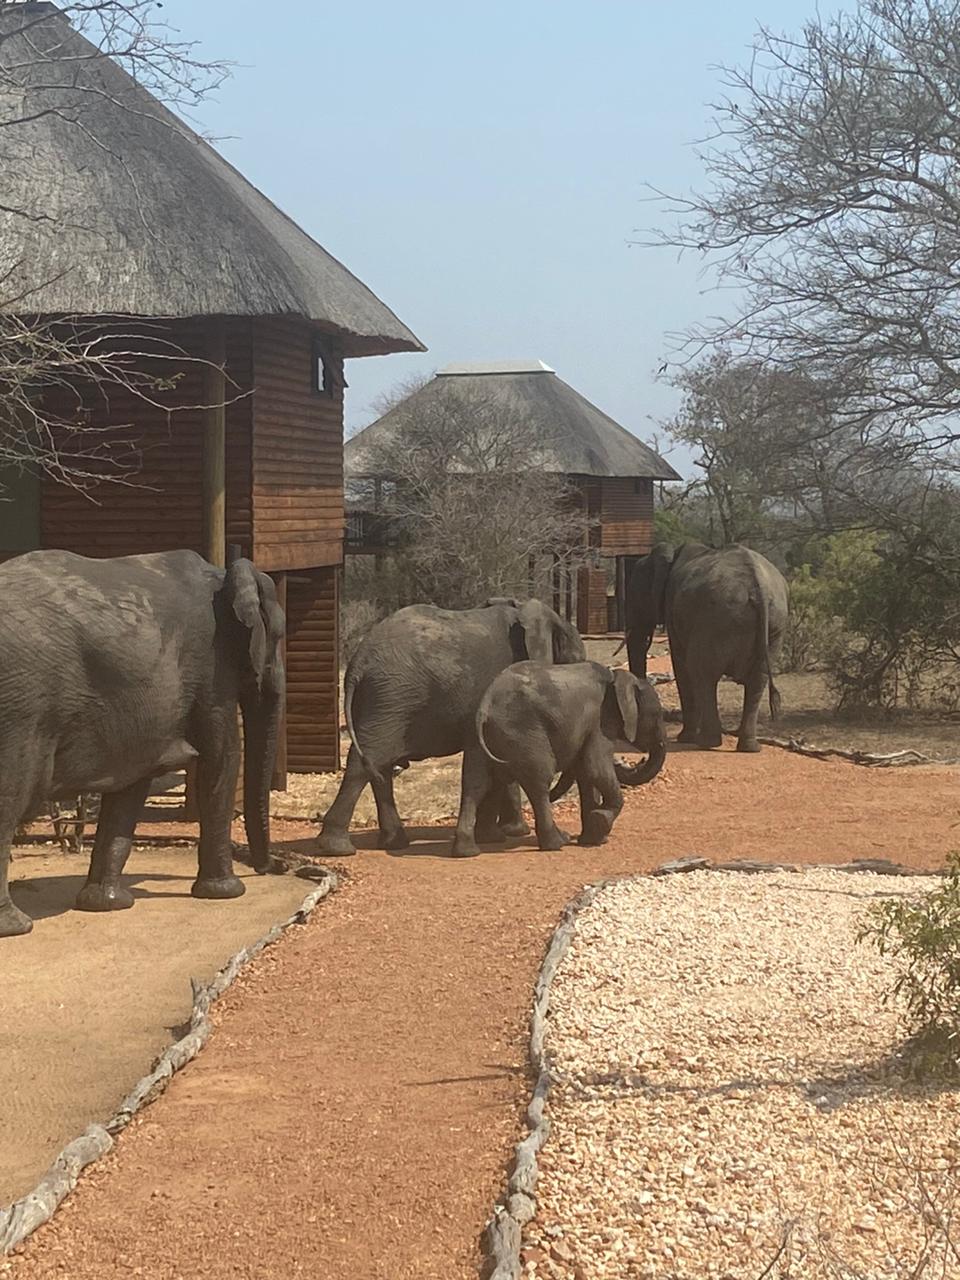 Elephants moving through nThambo